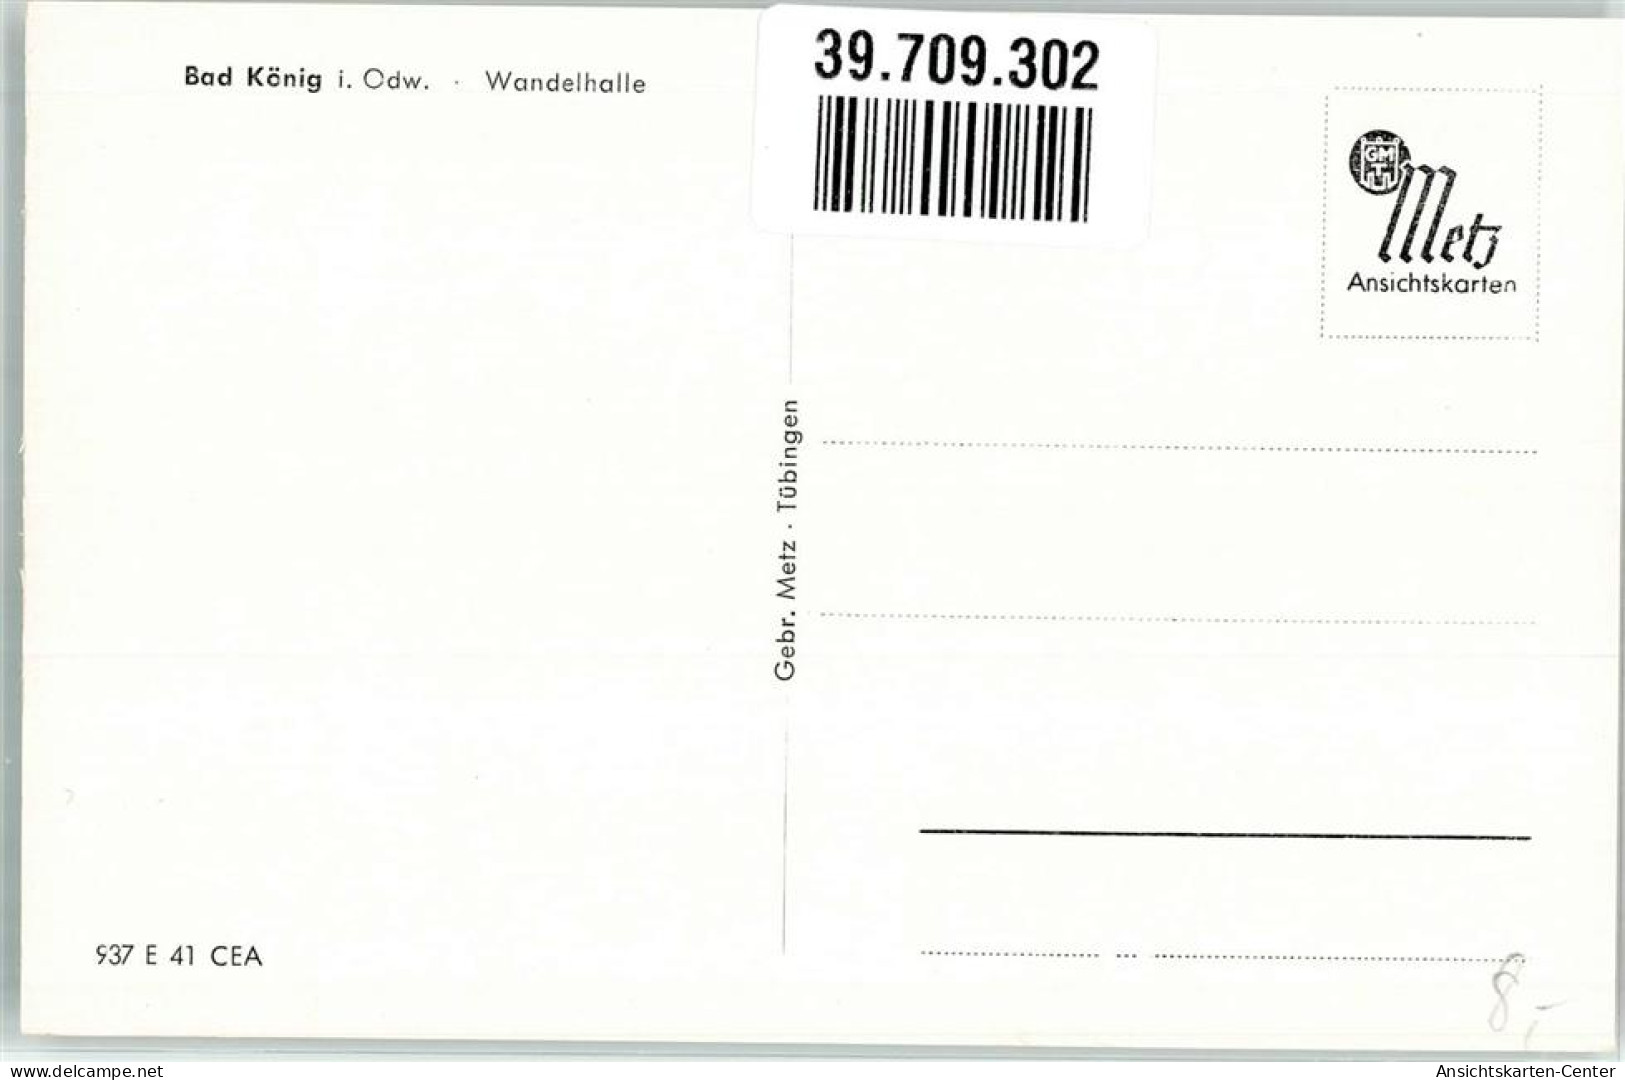 39709302 - Bad Koenig - Bad König